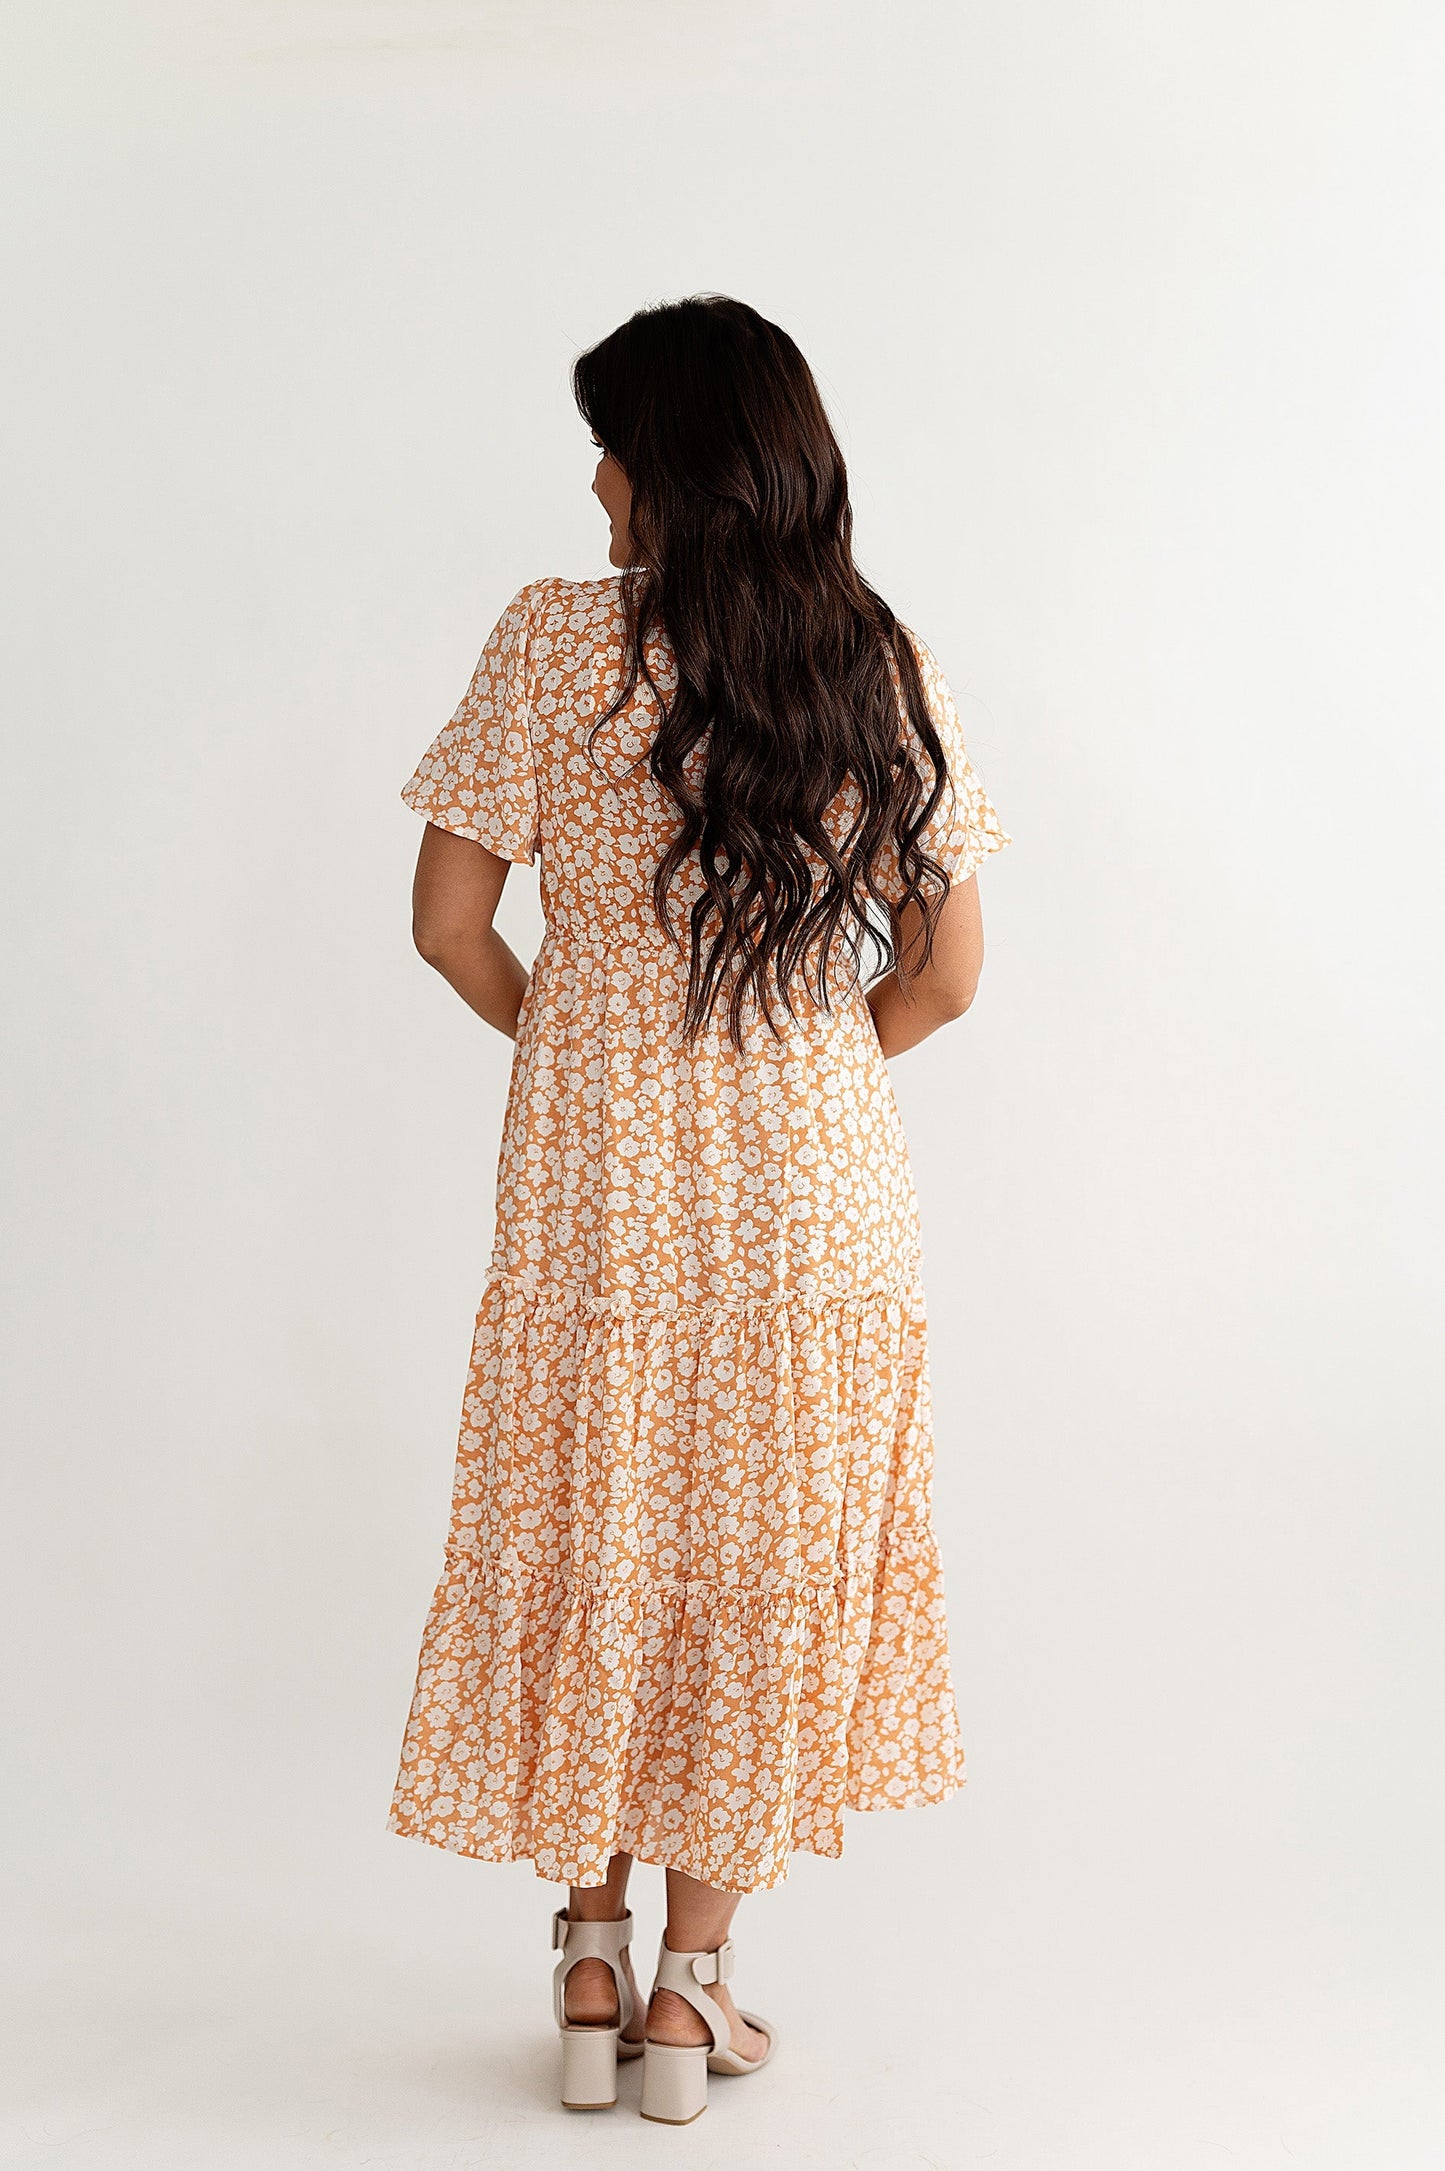 yayaq™-Eden Floral Dress in Apricot